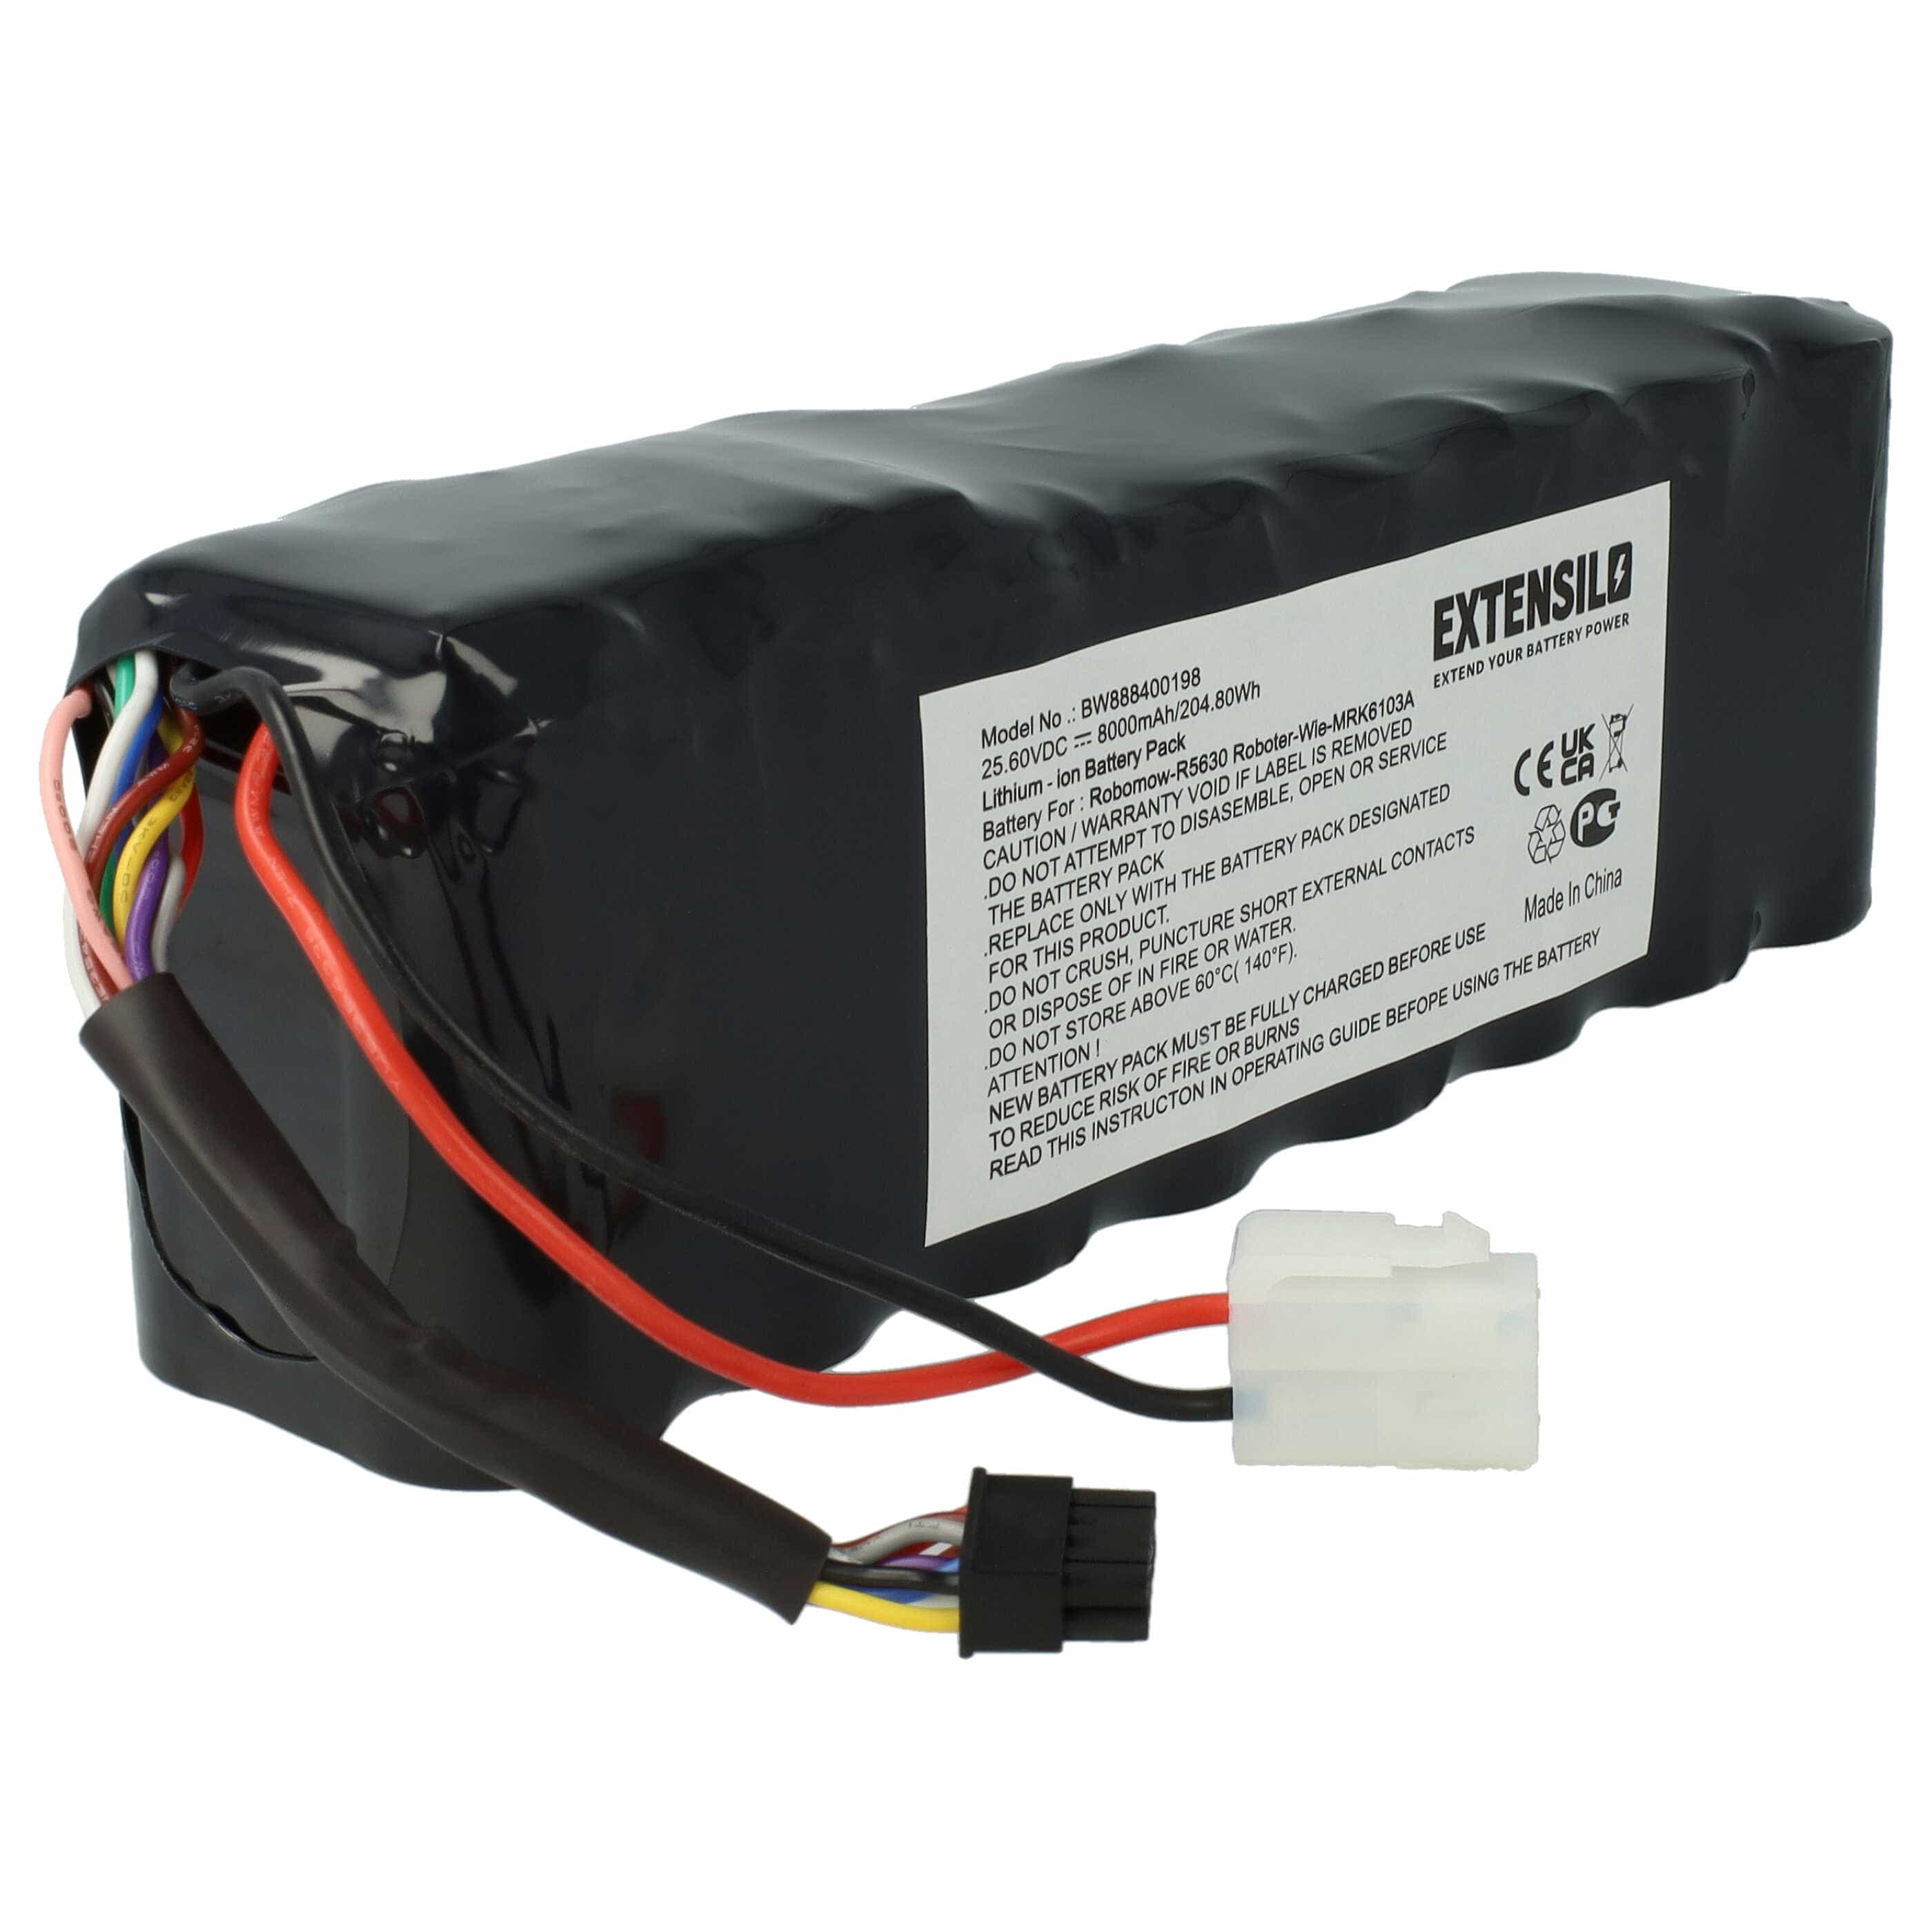 Lawnmower Battery Replacement for MRK6103A, MRK6105A, BAT6001B, BAT6000A, BAT6000C - 8000mAh 25.6V LiFePO4